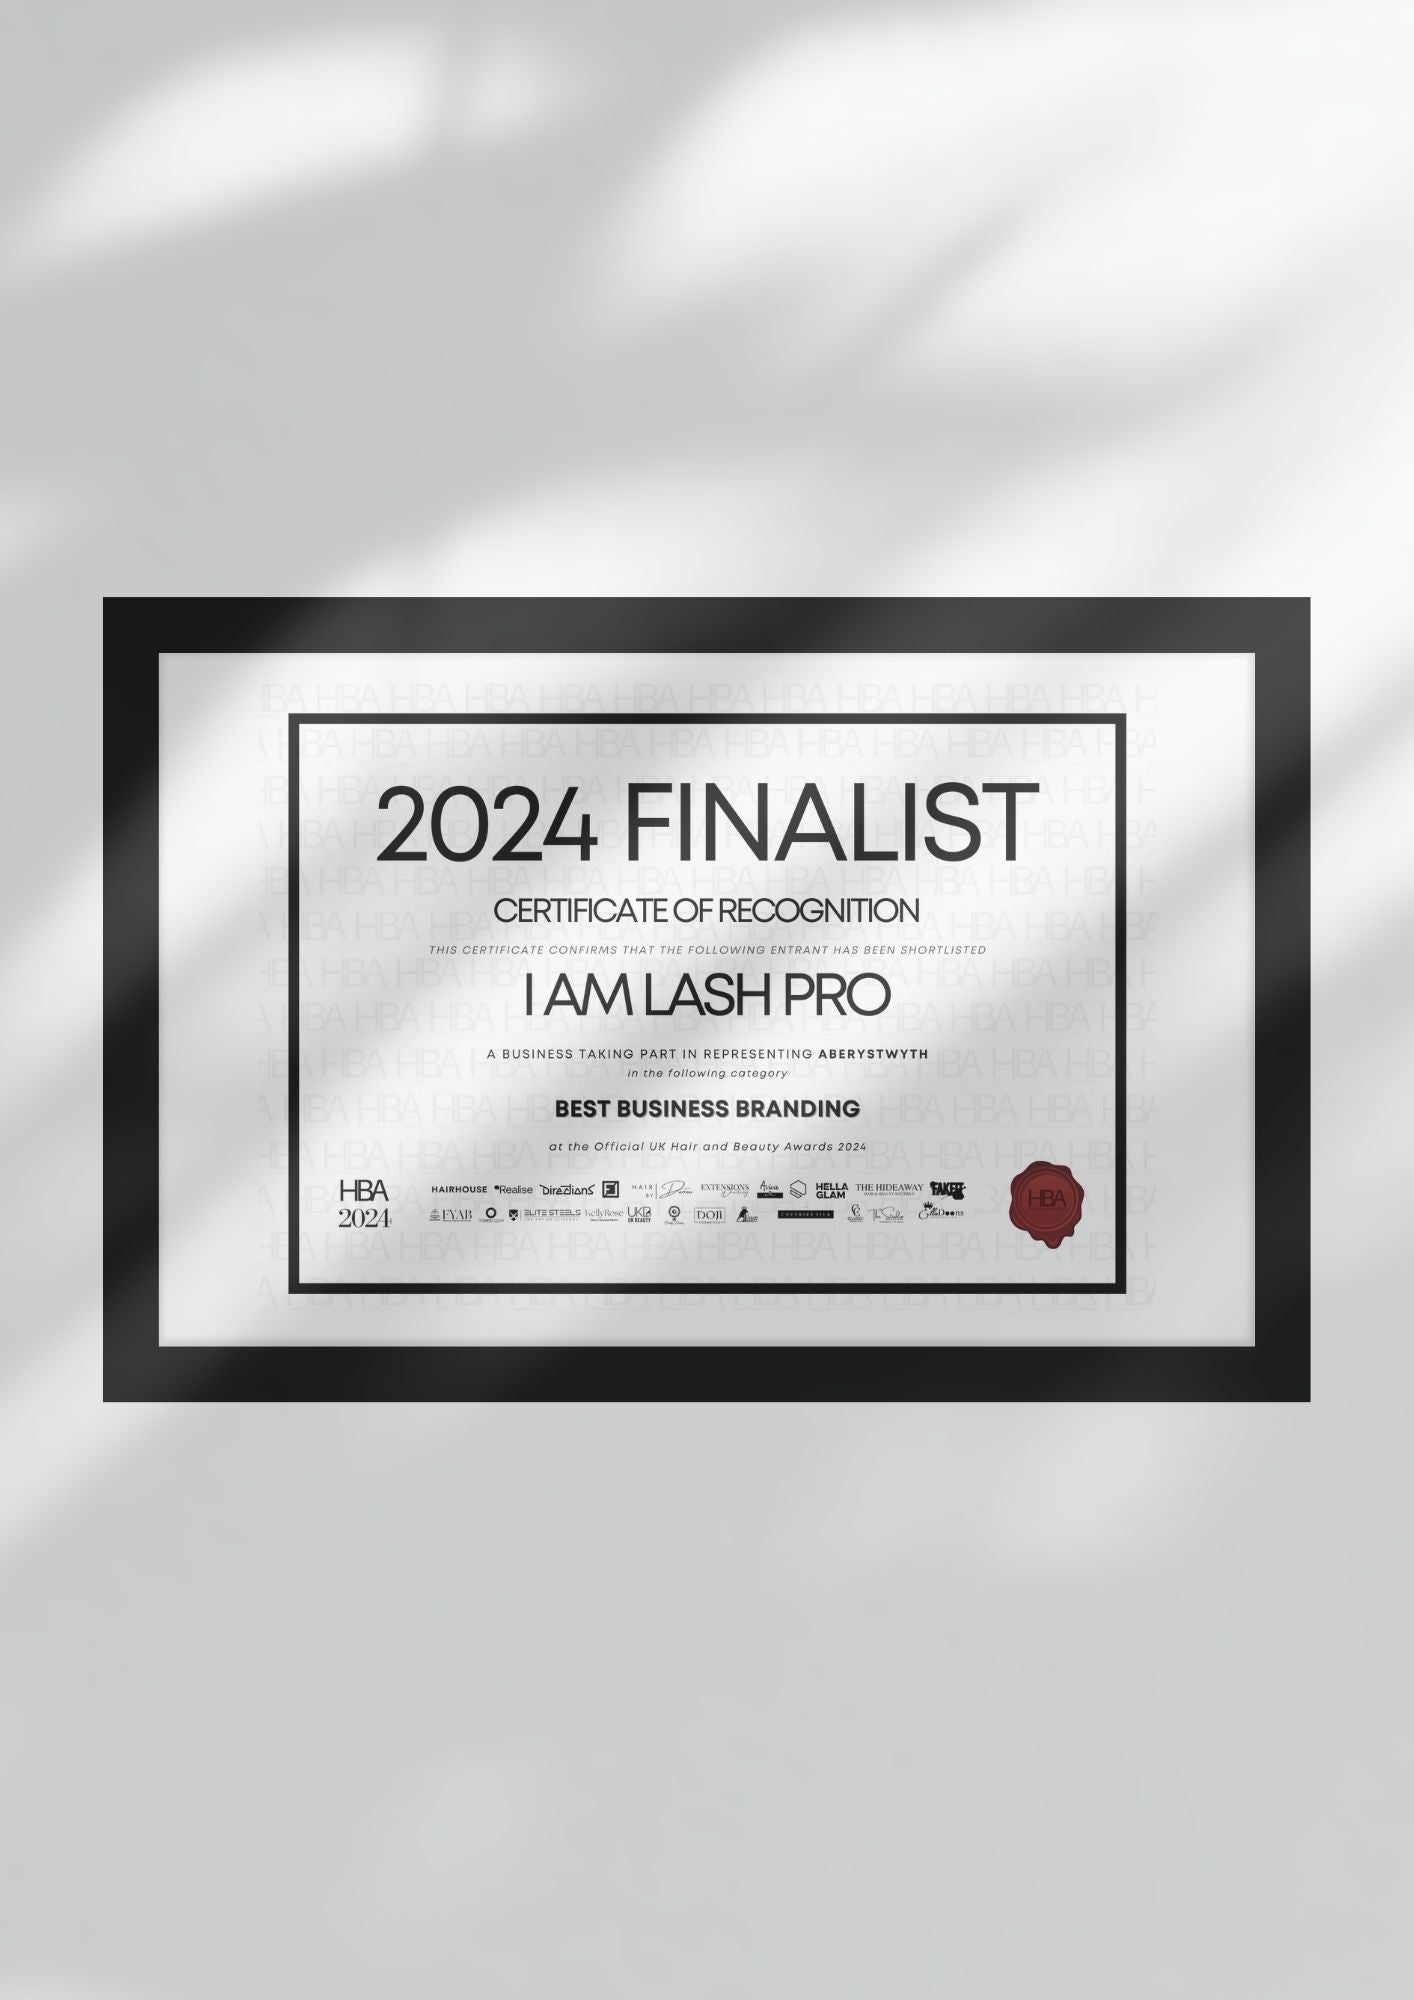 Eyelash Best Business Branding I AM Lash PRO 2024